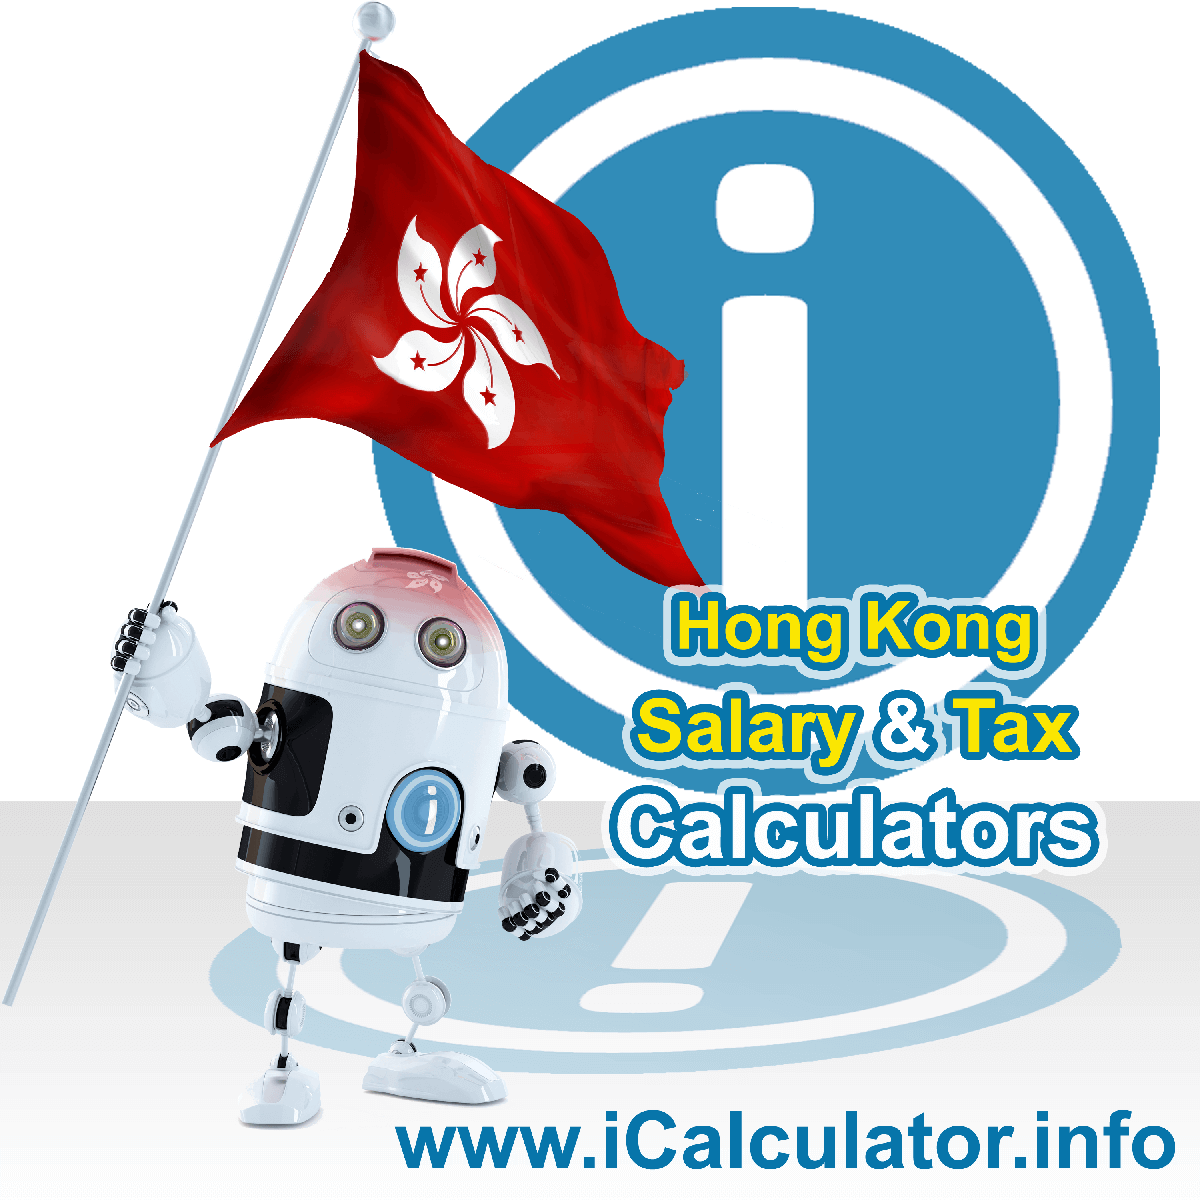 Hong Kong Tax Calculator. This image shows the Hong Kong flag and information relating to the tax formula for the Hong Kong Salary Calculator